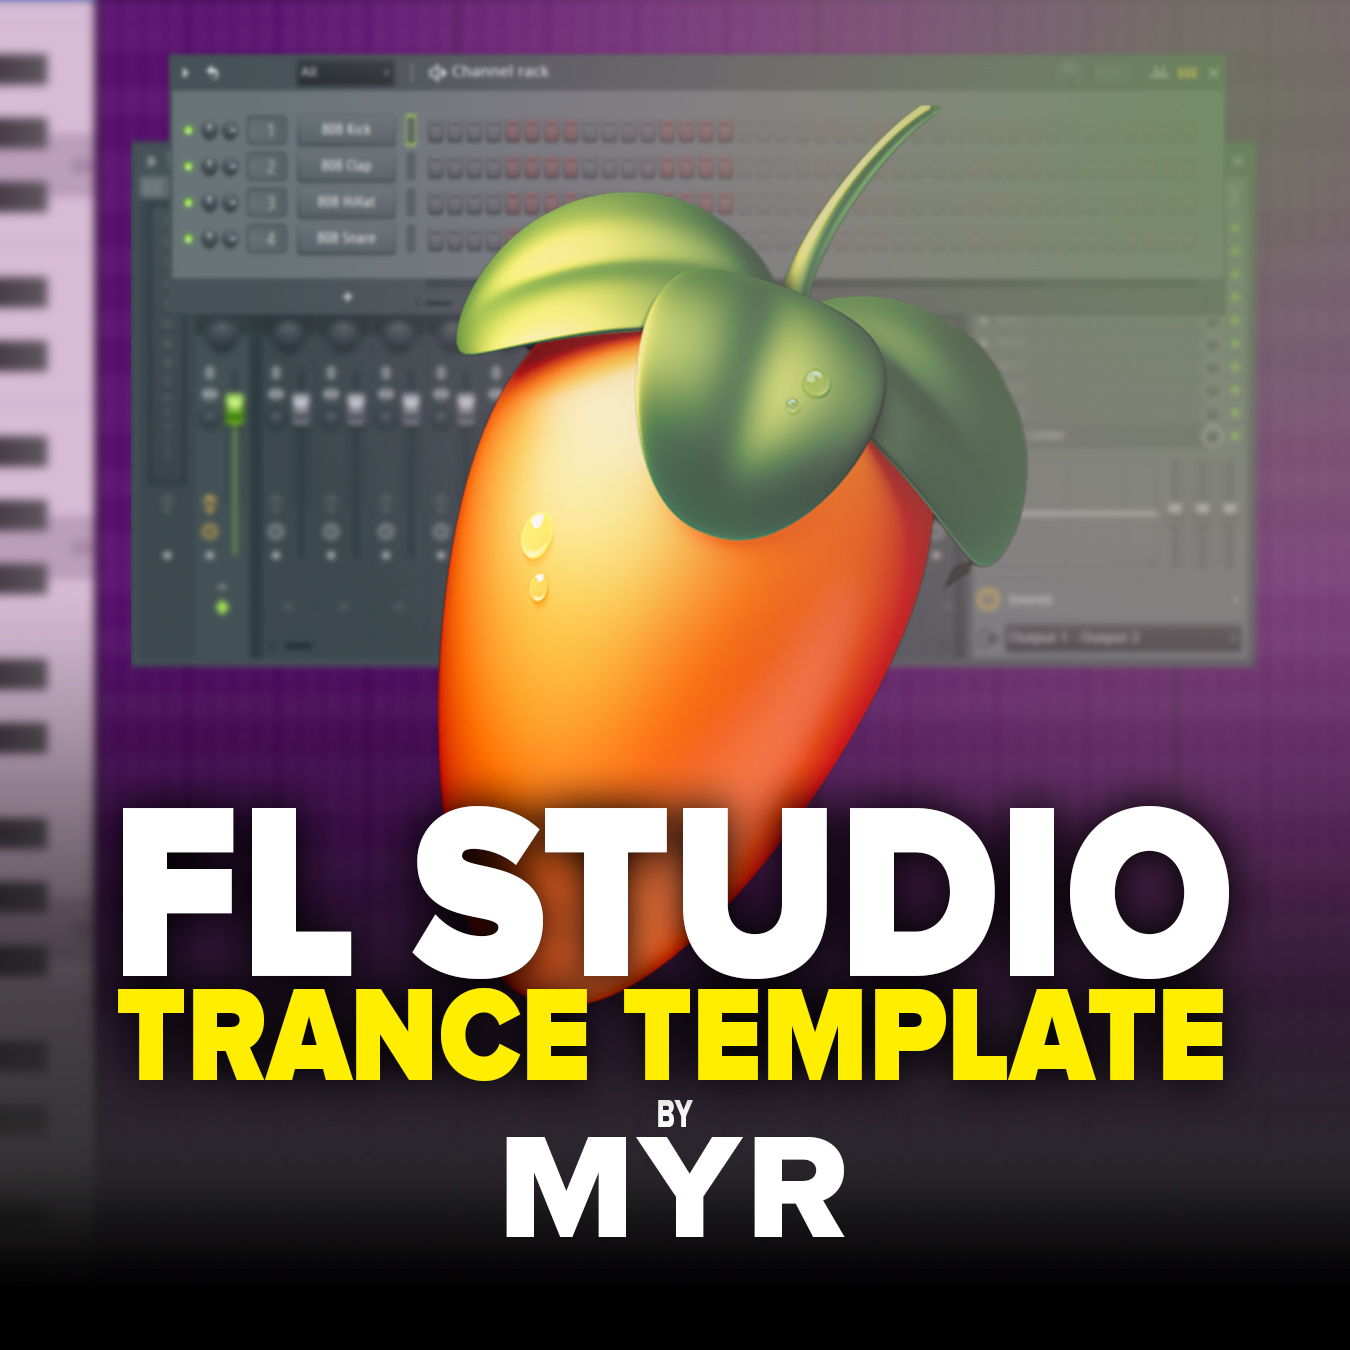 FL STUDIO Trance Template by MYR